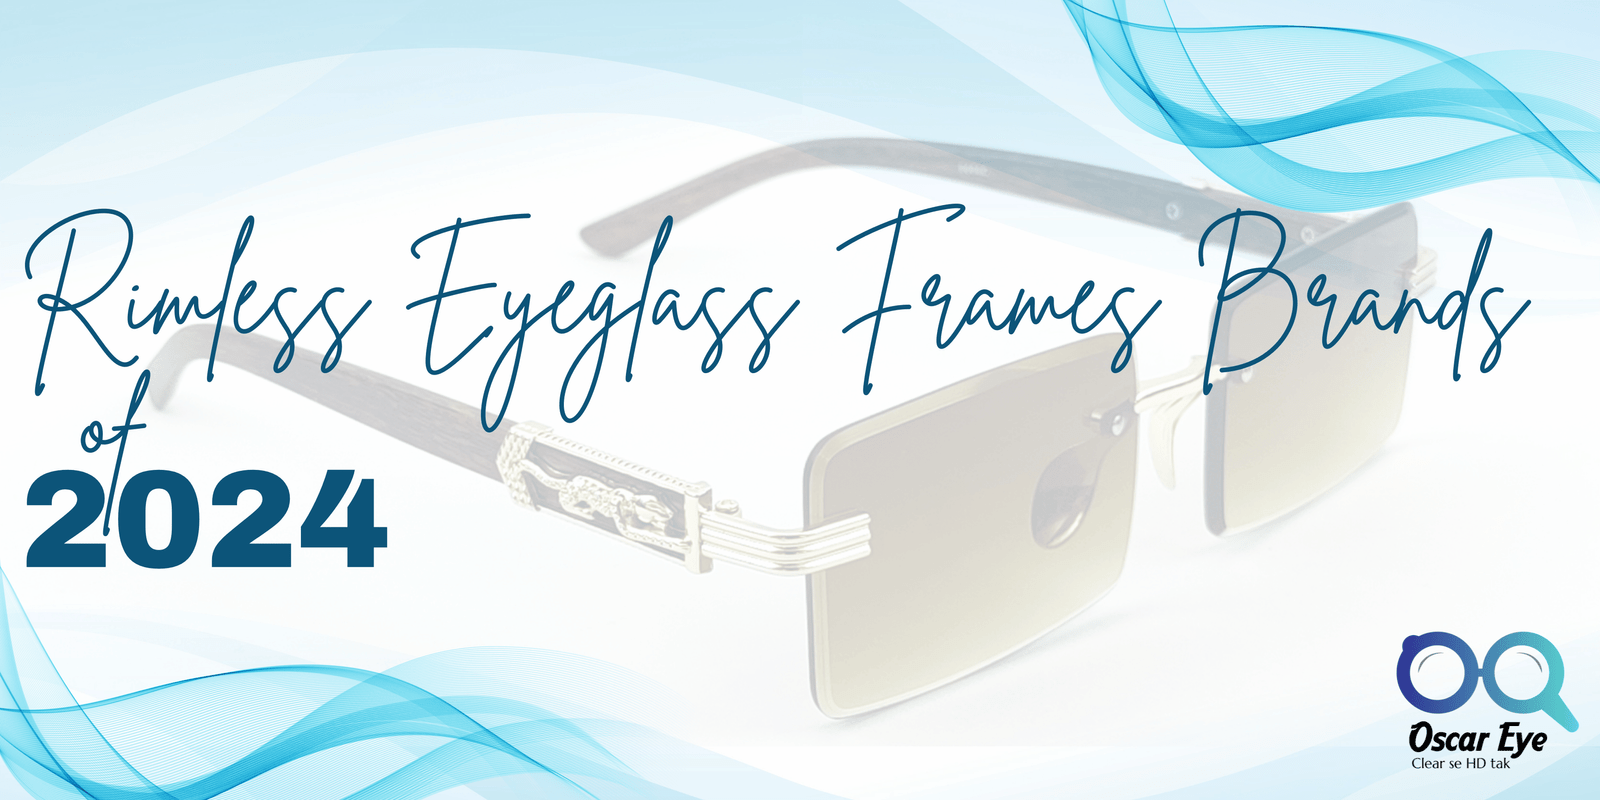 Rimless Eyeglass Frames Brands